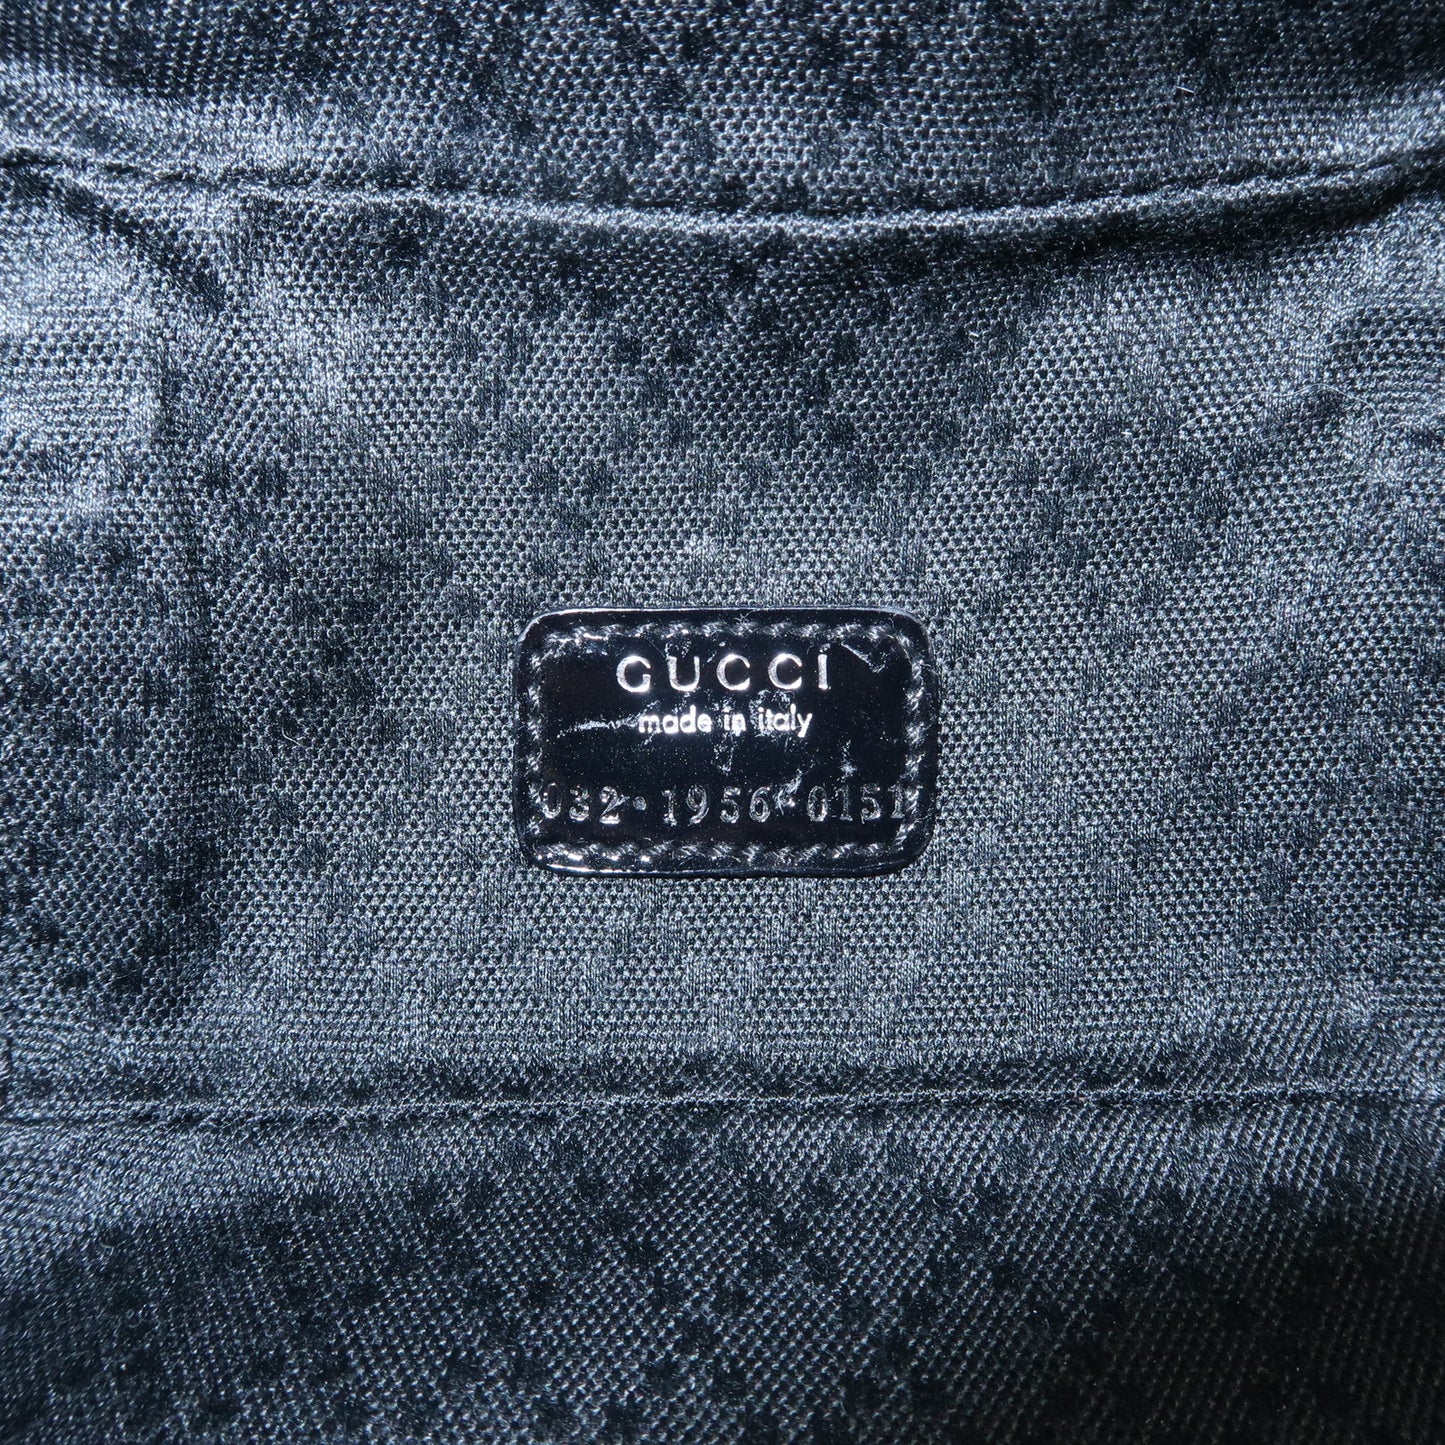 GUCCI Bamboo Nylon Leather Vanity Case Black 032.1956.0151